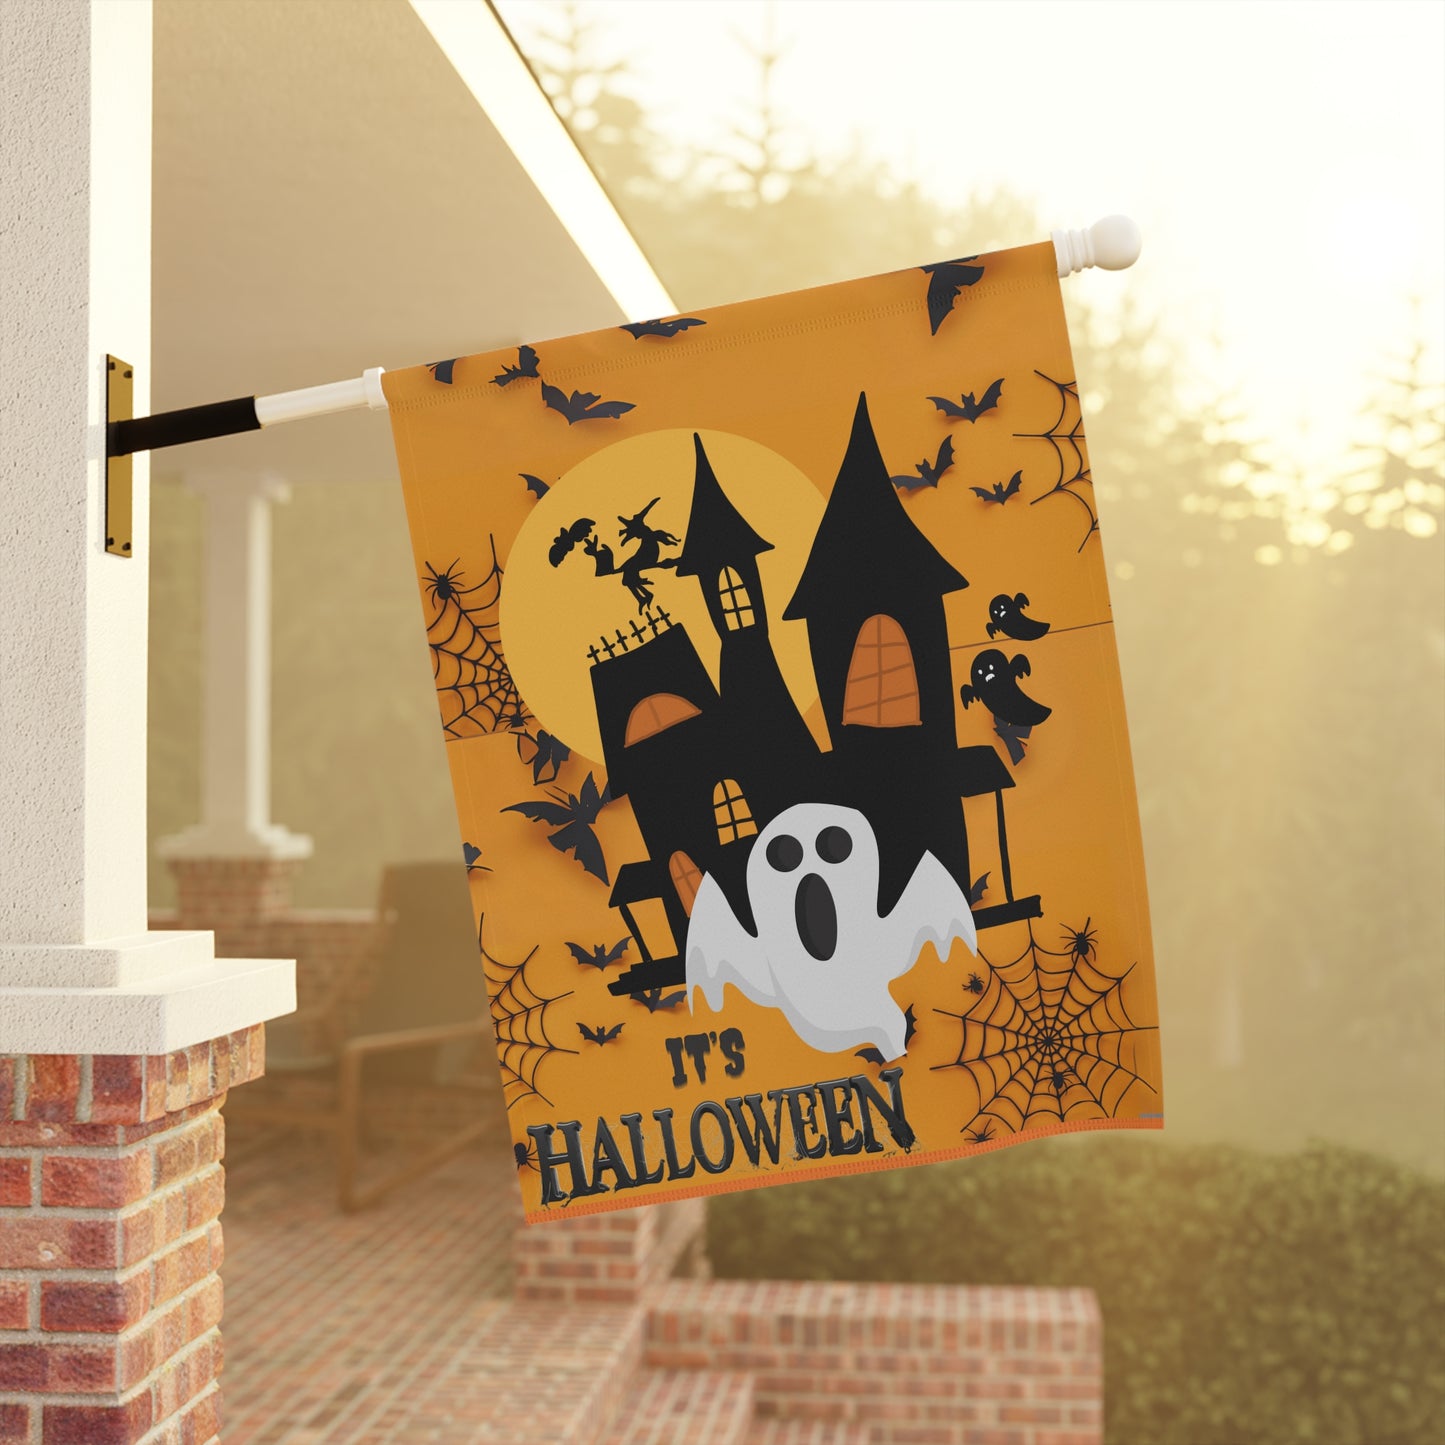 It's Halloween Garden & House Banners